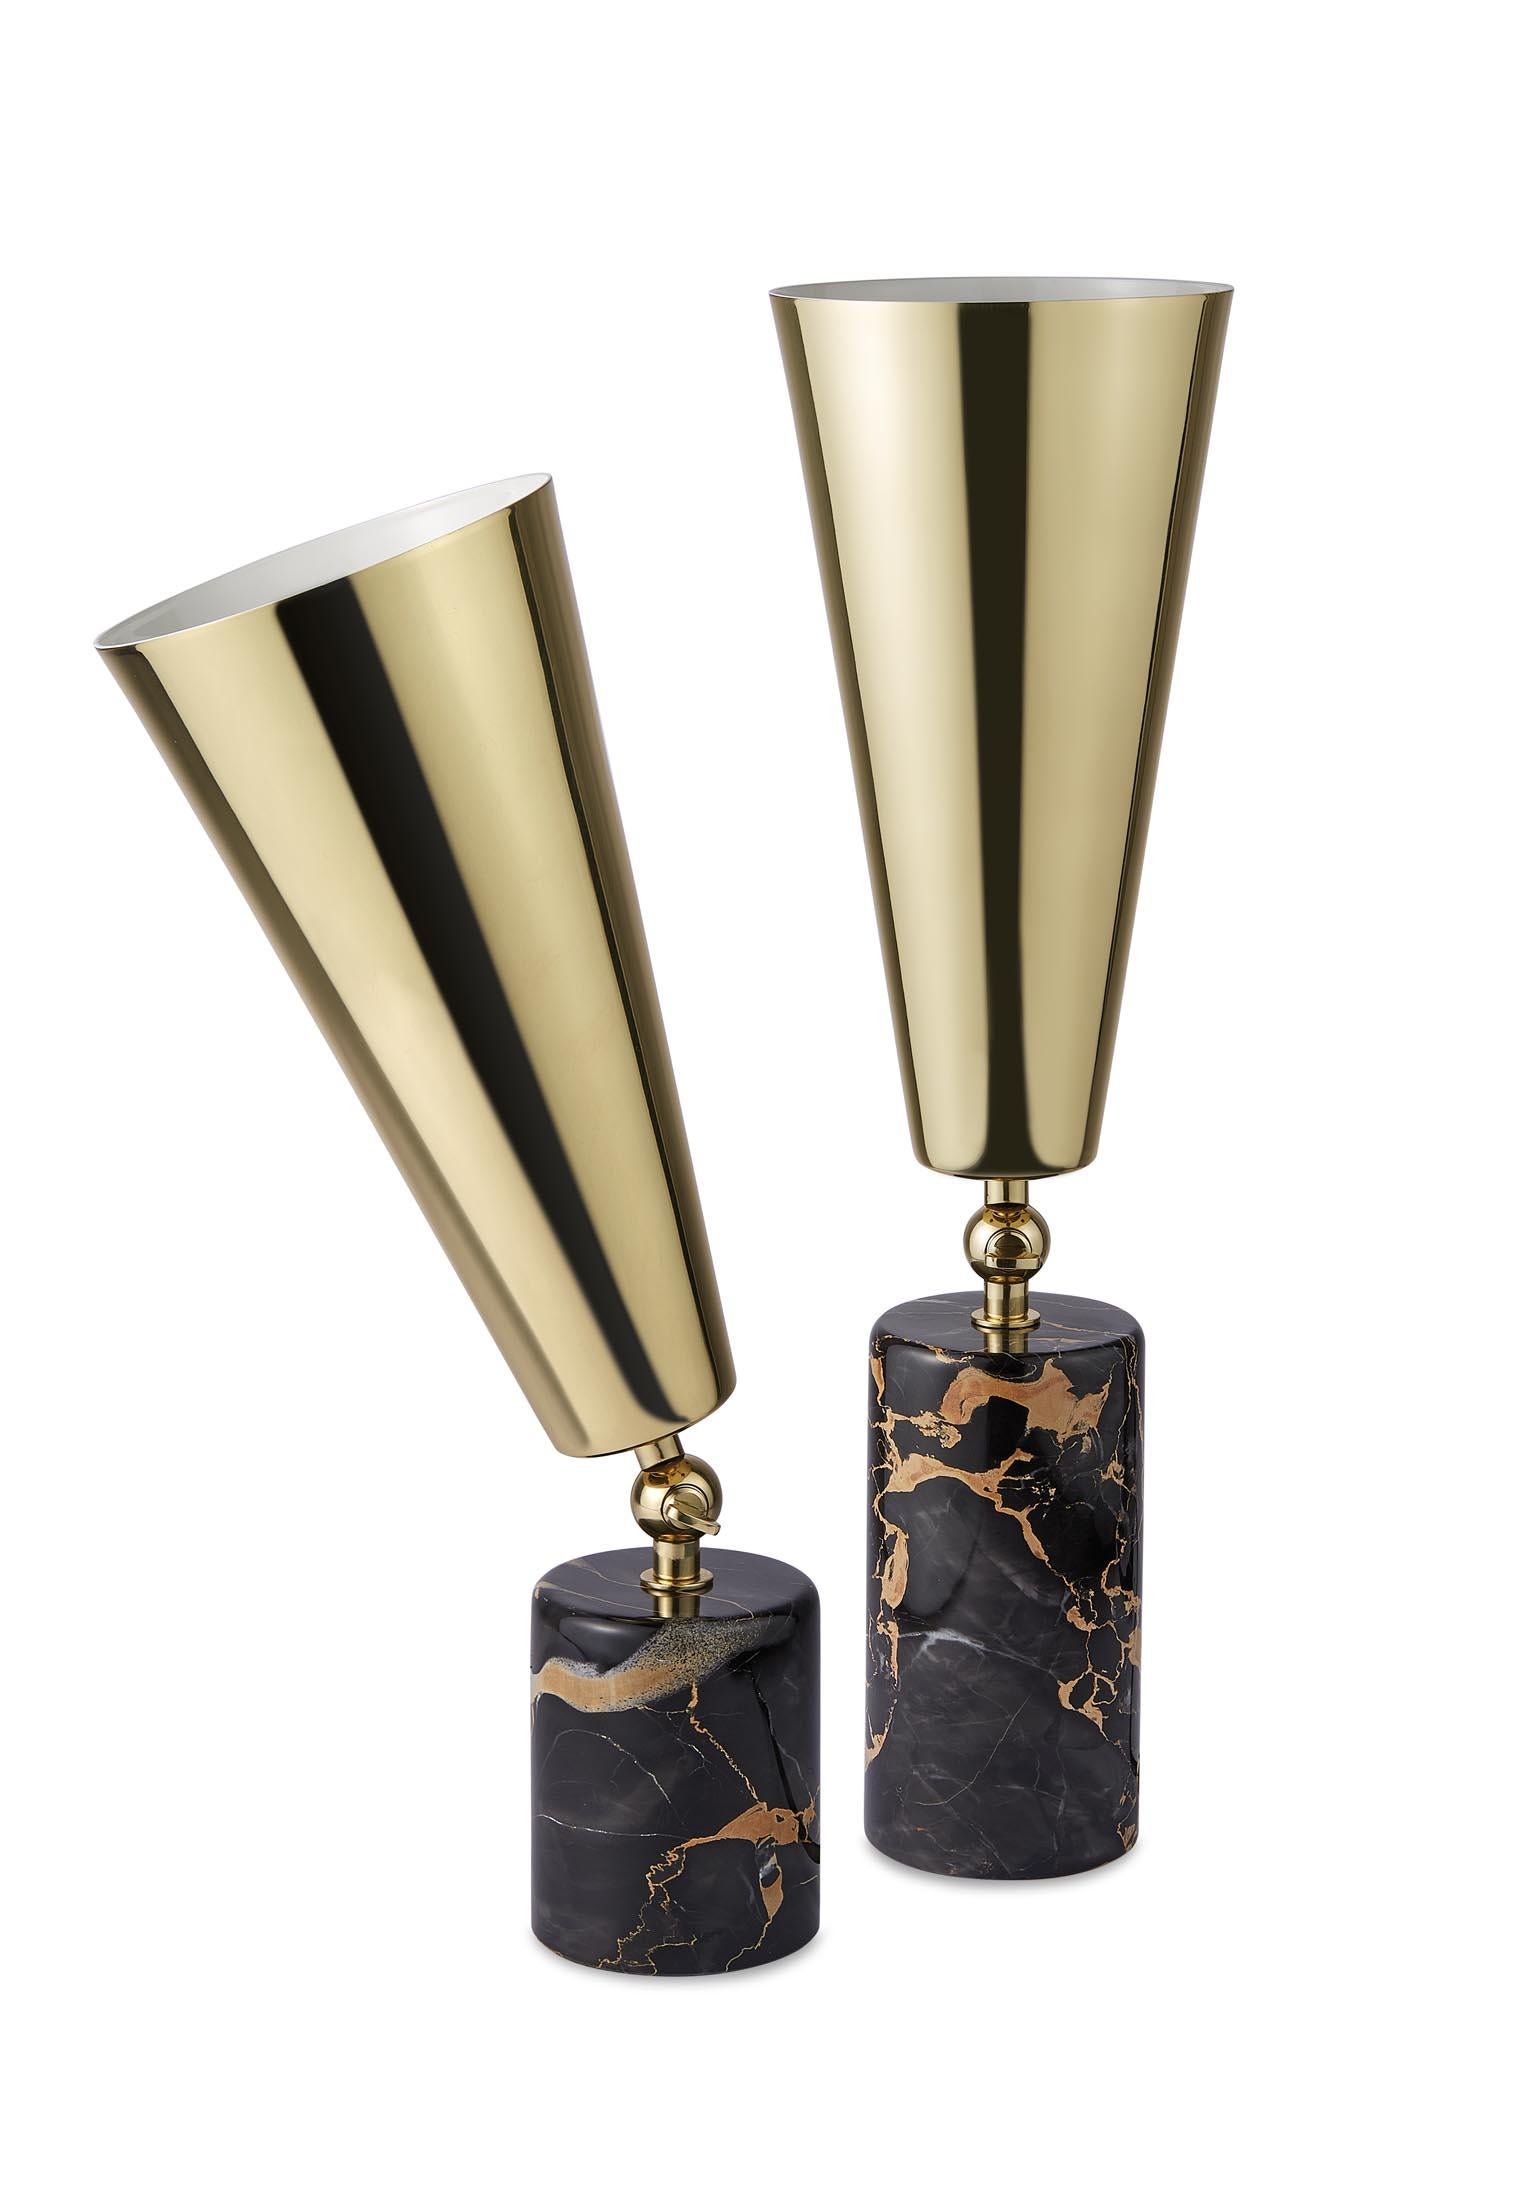 Mid-Century Modern Tato Italia 'Vox' Table Lamp in Portoro Marble and Brass For Sale